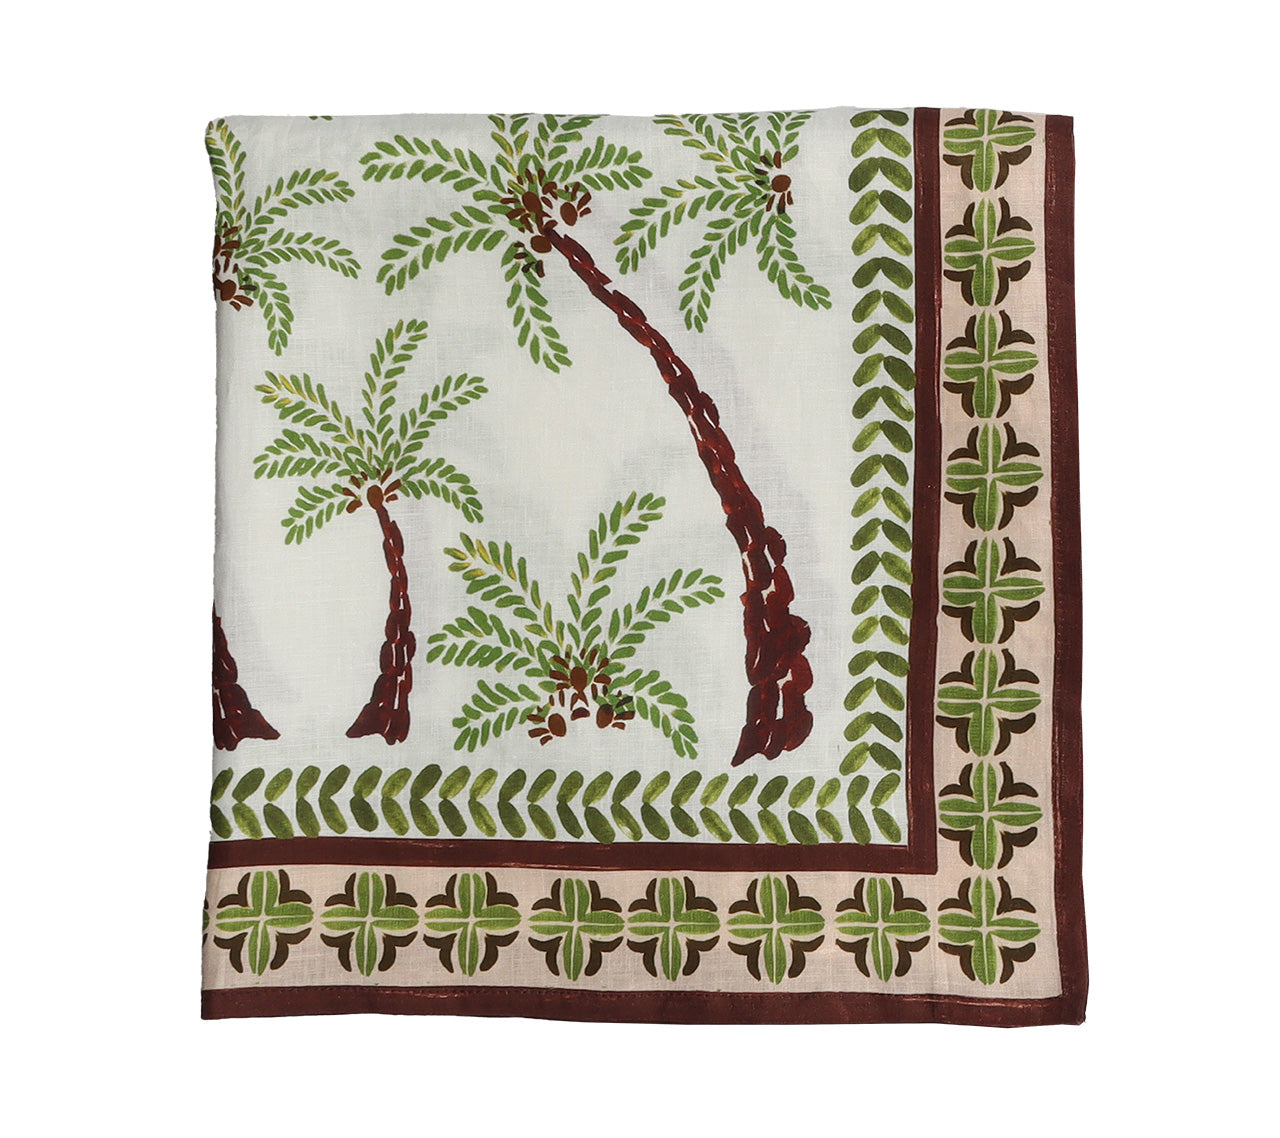 Kim Seybert Luxury Oasis Tablecloth in Ivory, Green & Brown